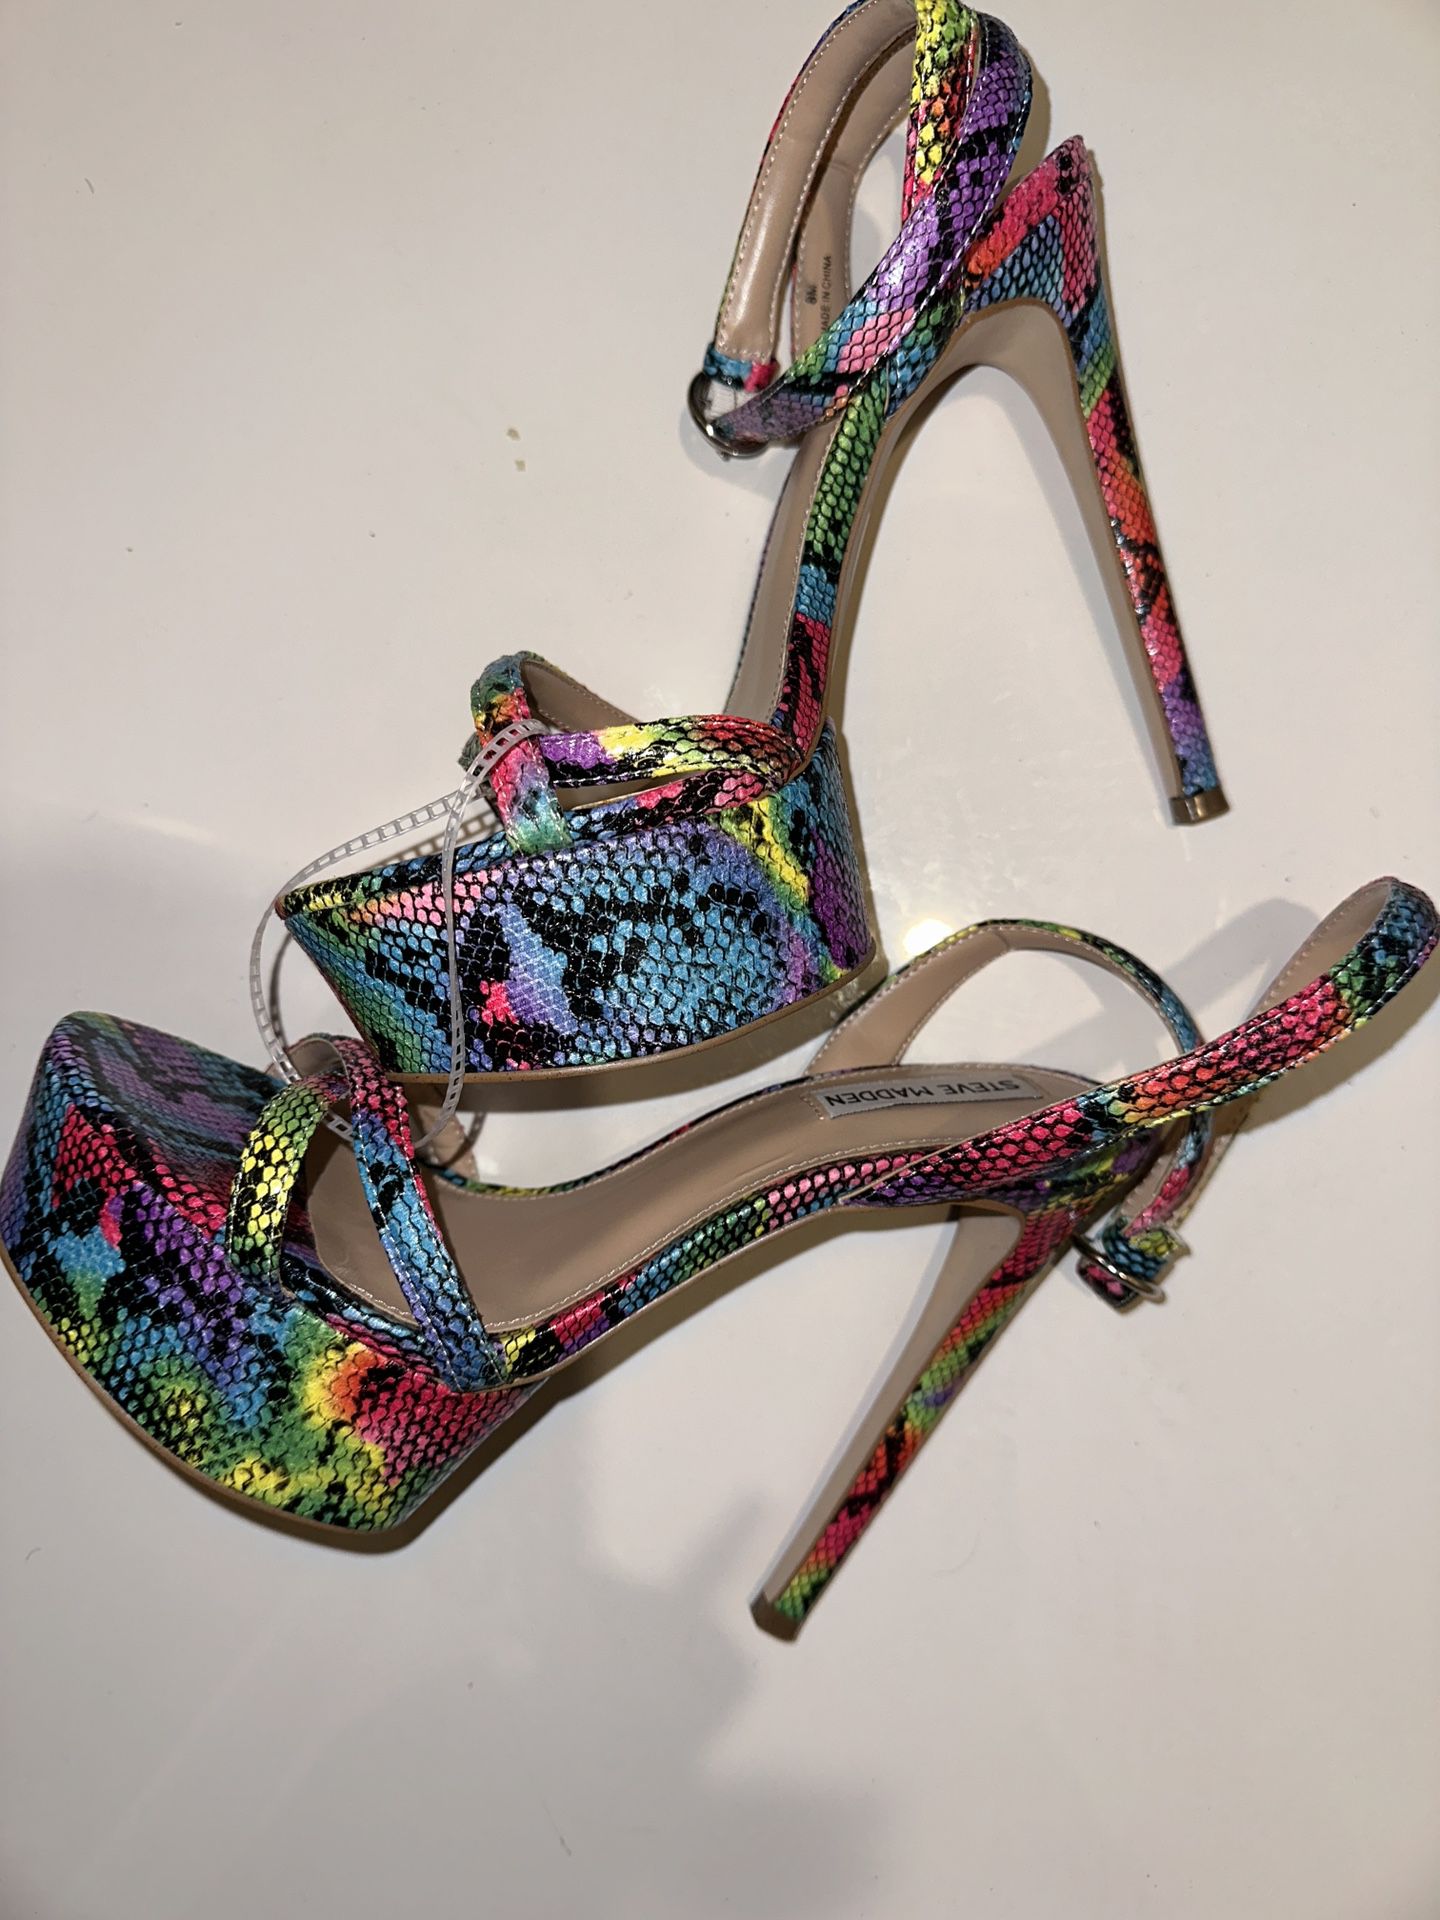 Steve Madden Dillards Macys Shoes Heels Sandals Stiletto 8 Python Spring Multi Color Rainbow Pink Snake Animal Mall Shopping New